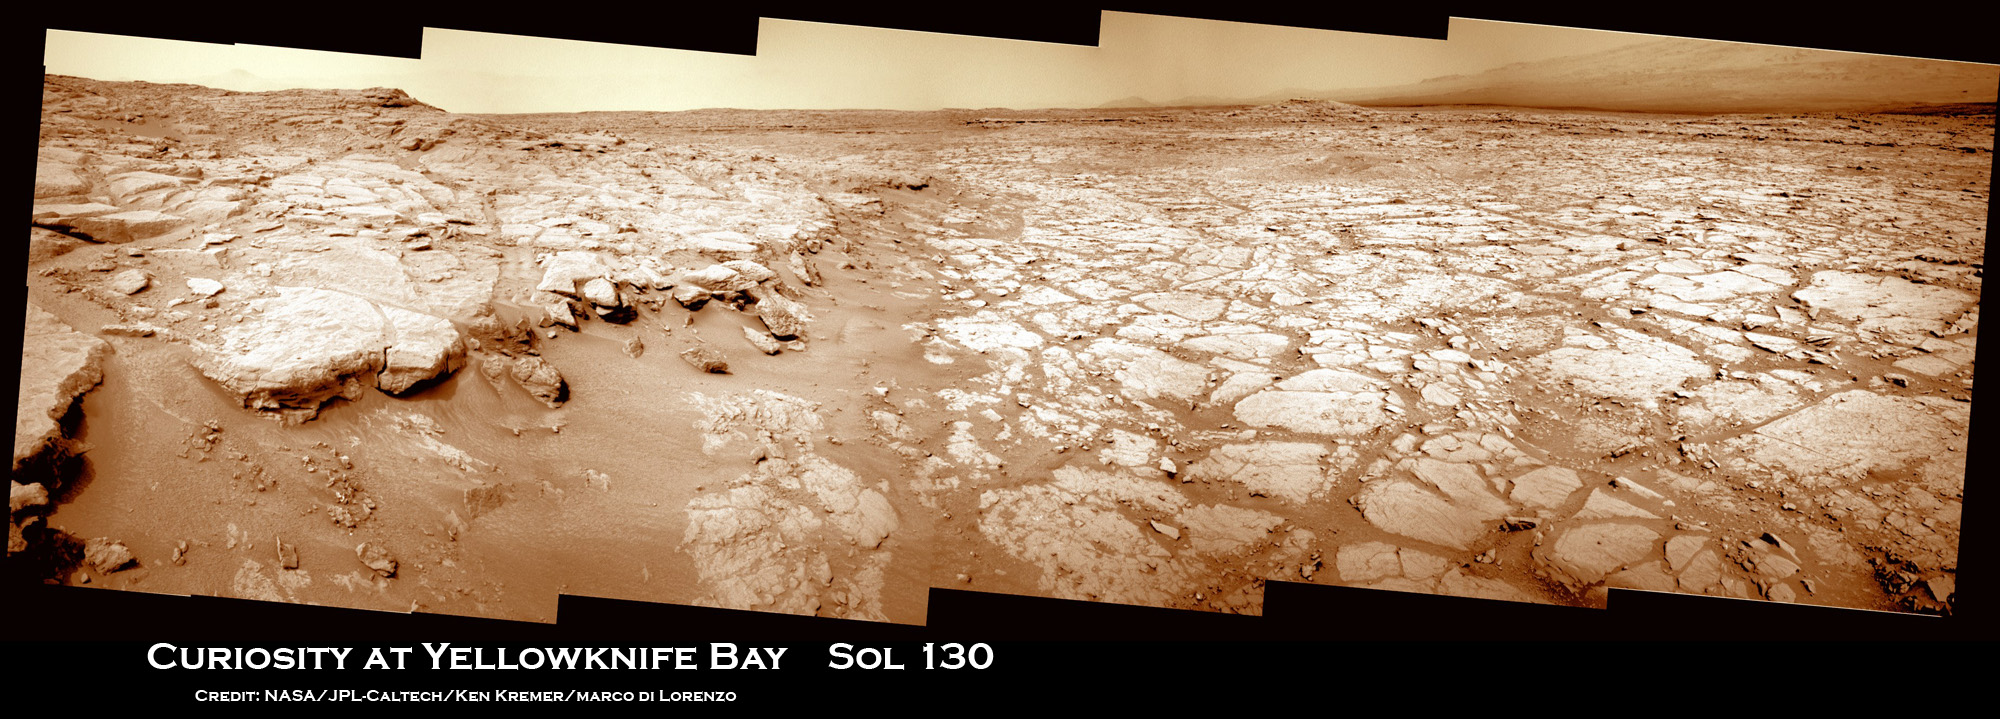 Curiosity-at-Yellowknife-Bay-Sol-130 3a Ken-Kremer.jpg